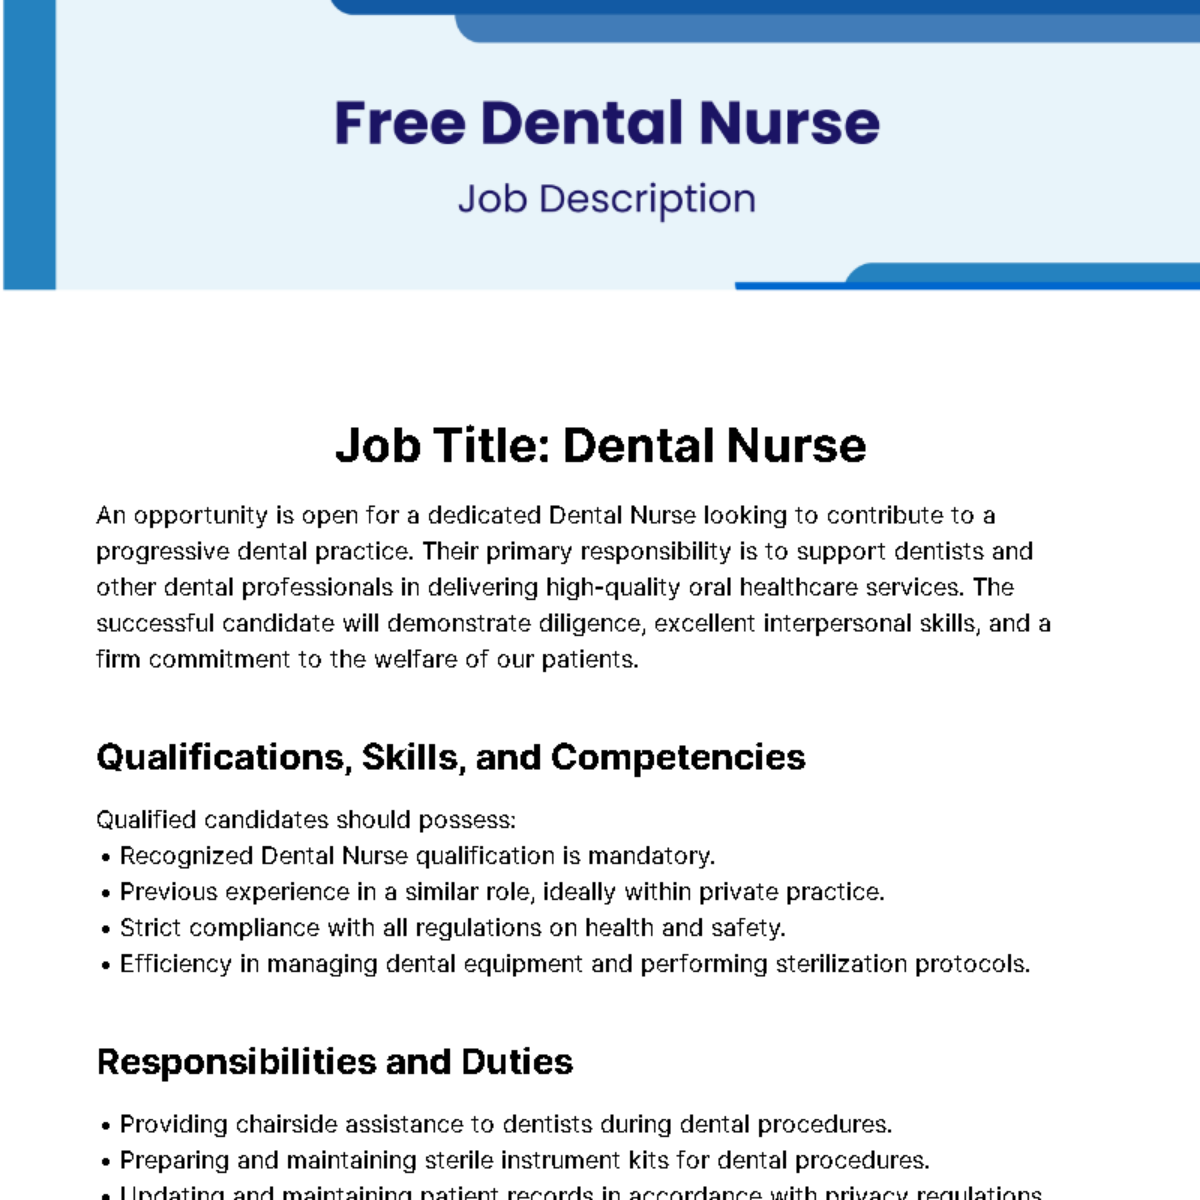 Free Dental Nurse Job Description Template